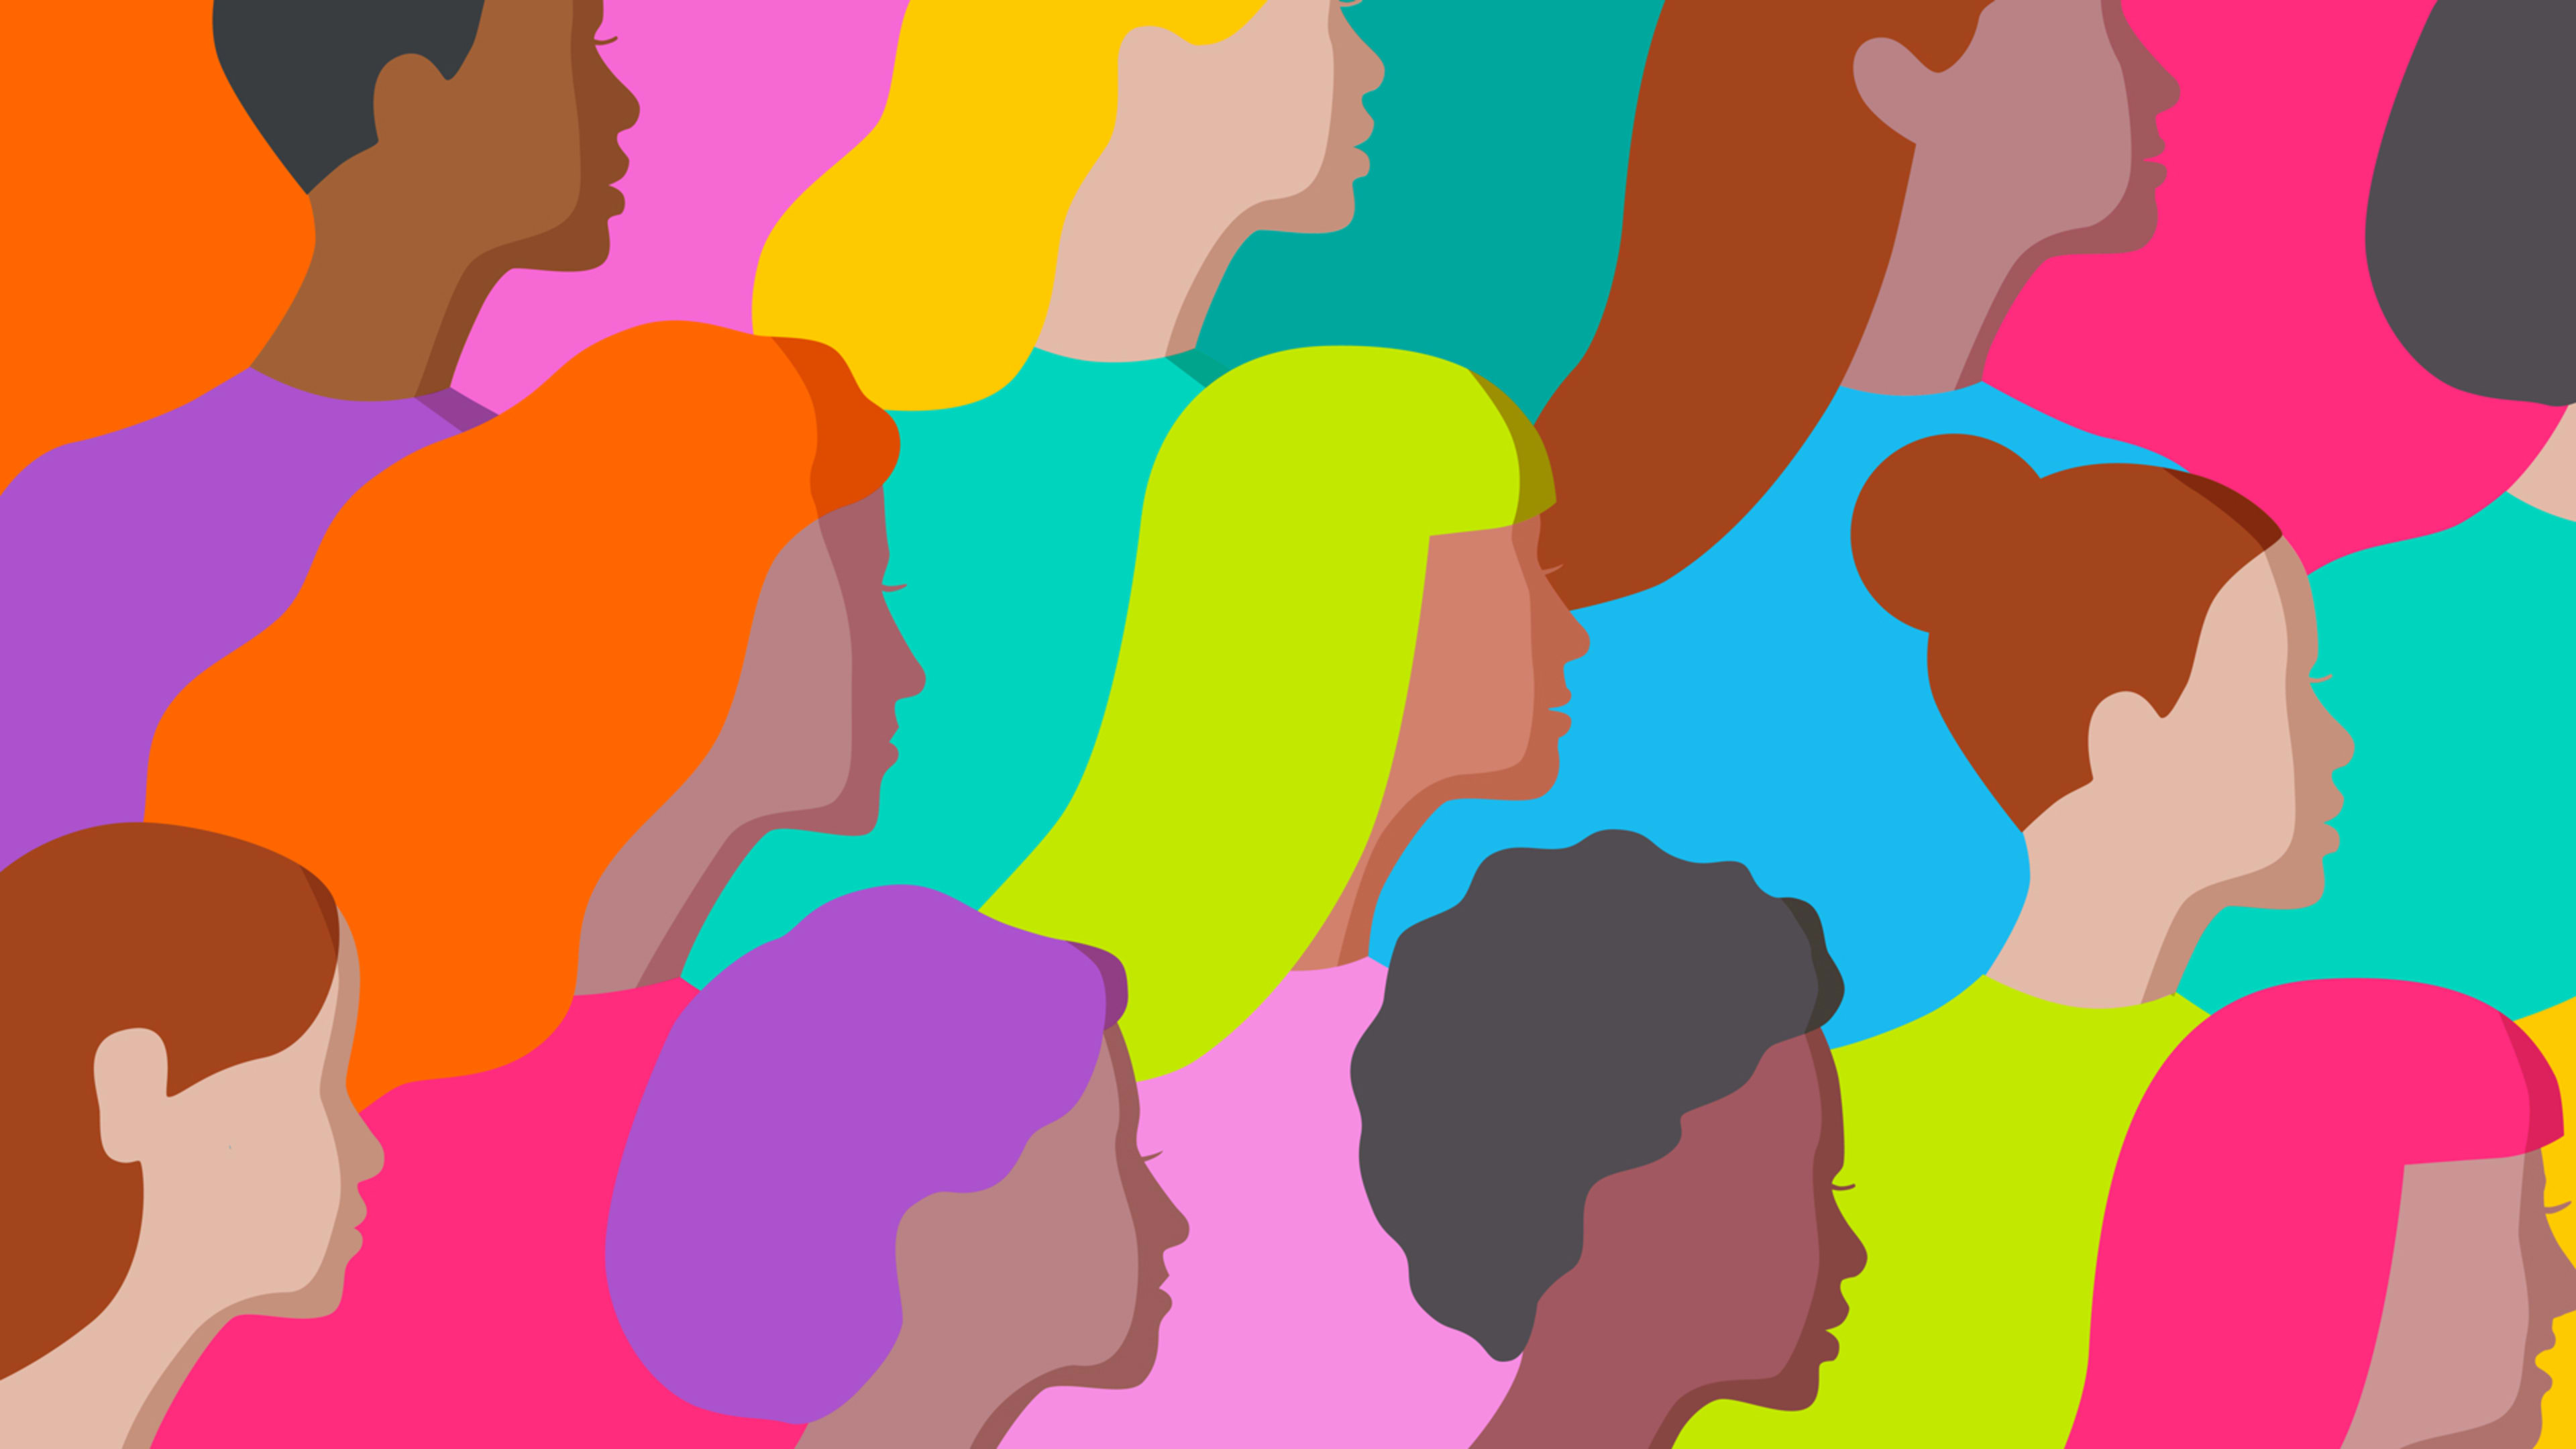 Billie Jean King-backed study finds women of color feel undervalued at work